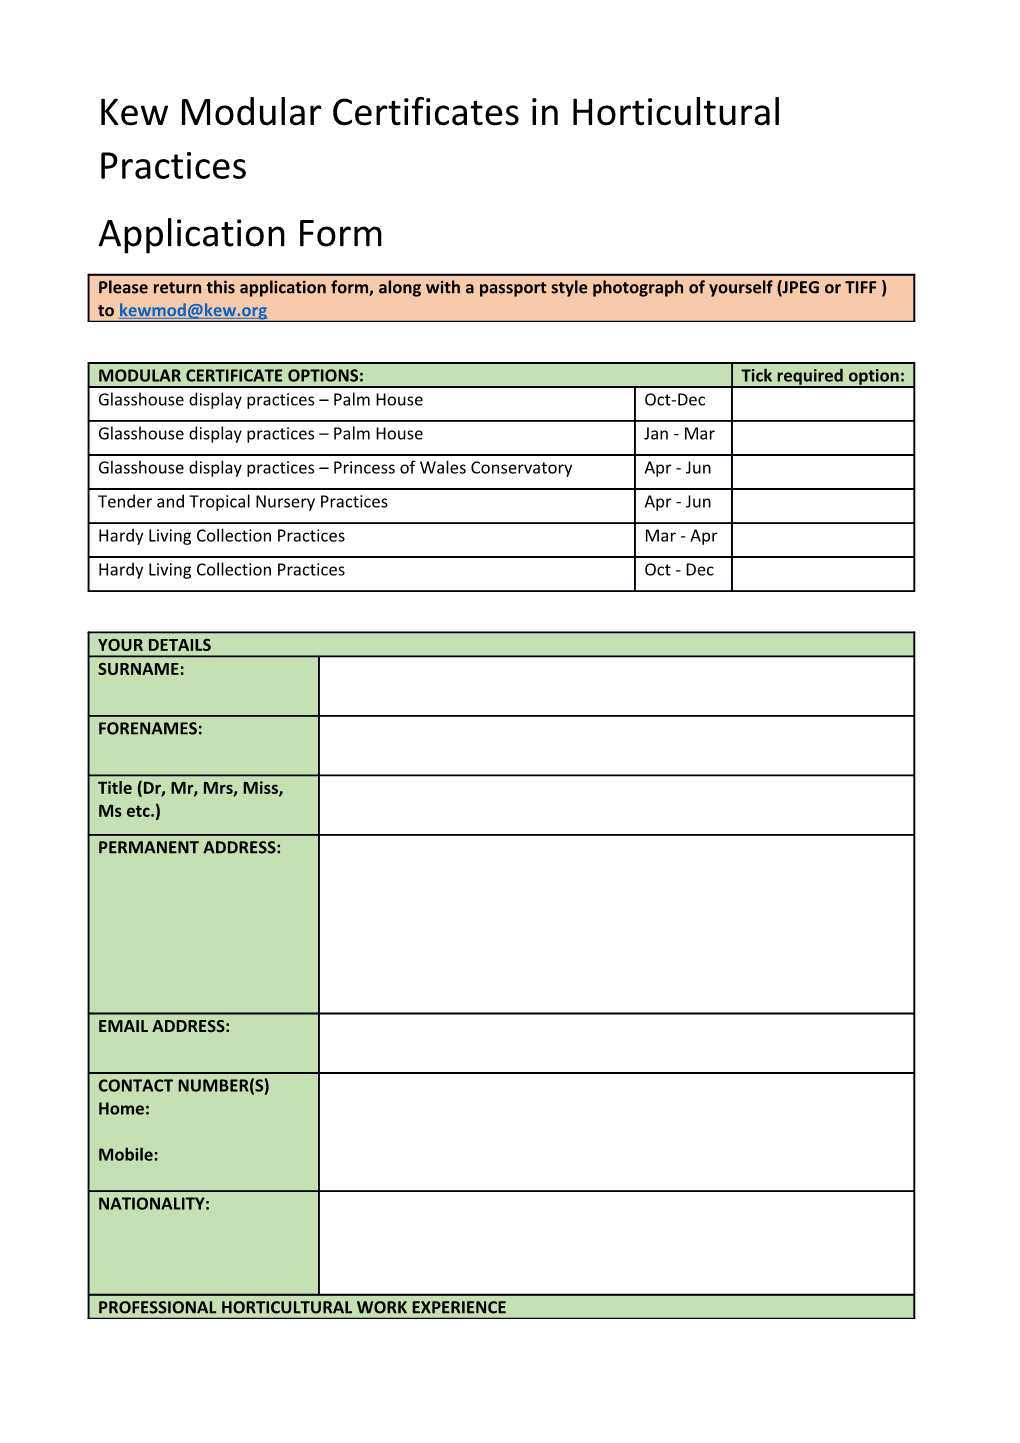 Kew Modular Certificates in Horticultural Practices